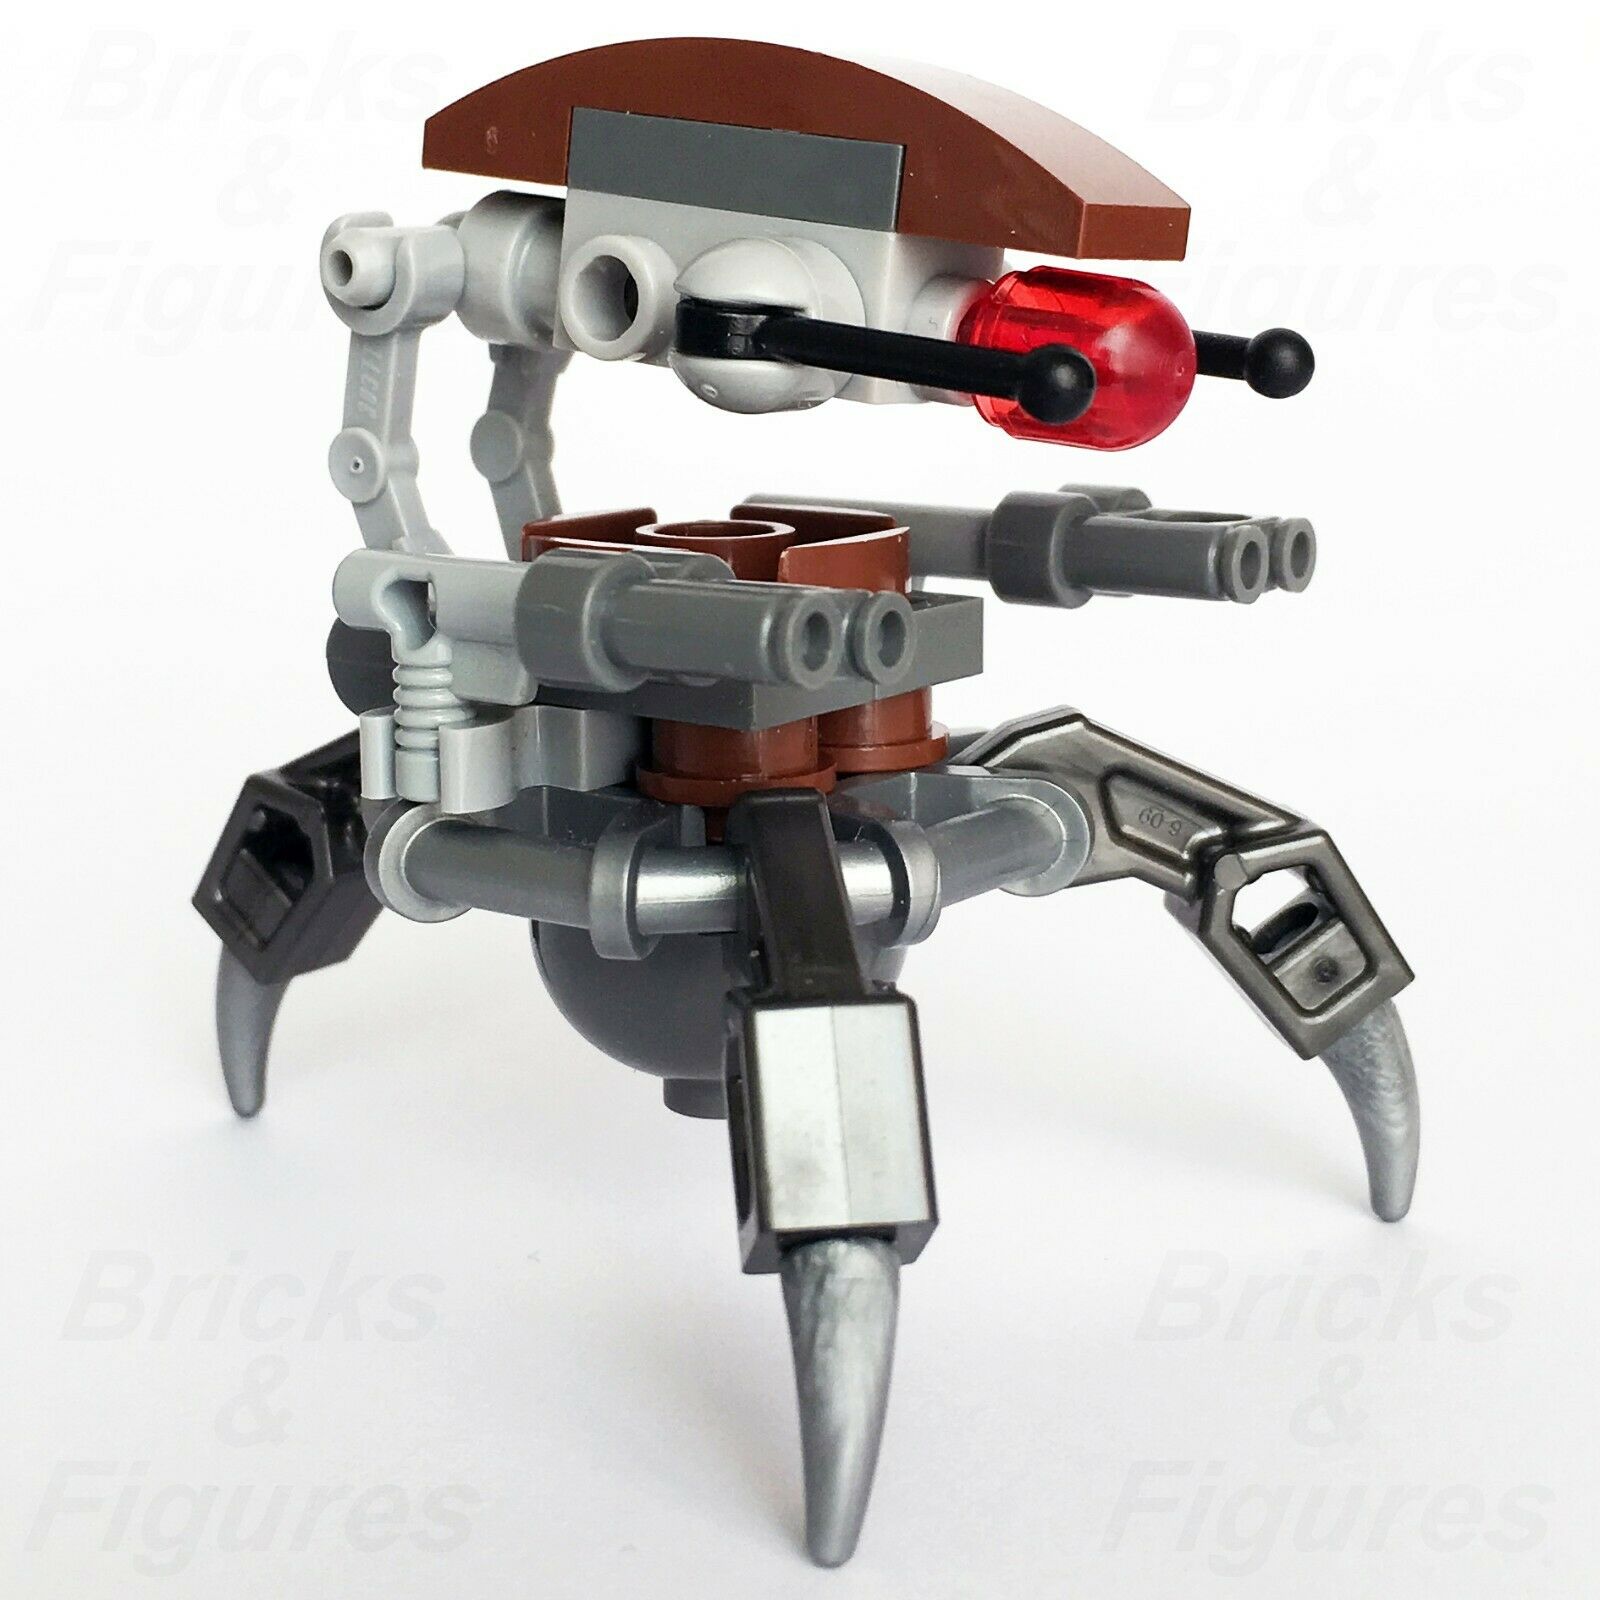 Star Wars LEGO Droideka Separatist Droid Clone Wars Minifigure 75000 - Bricks & Figures